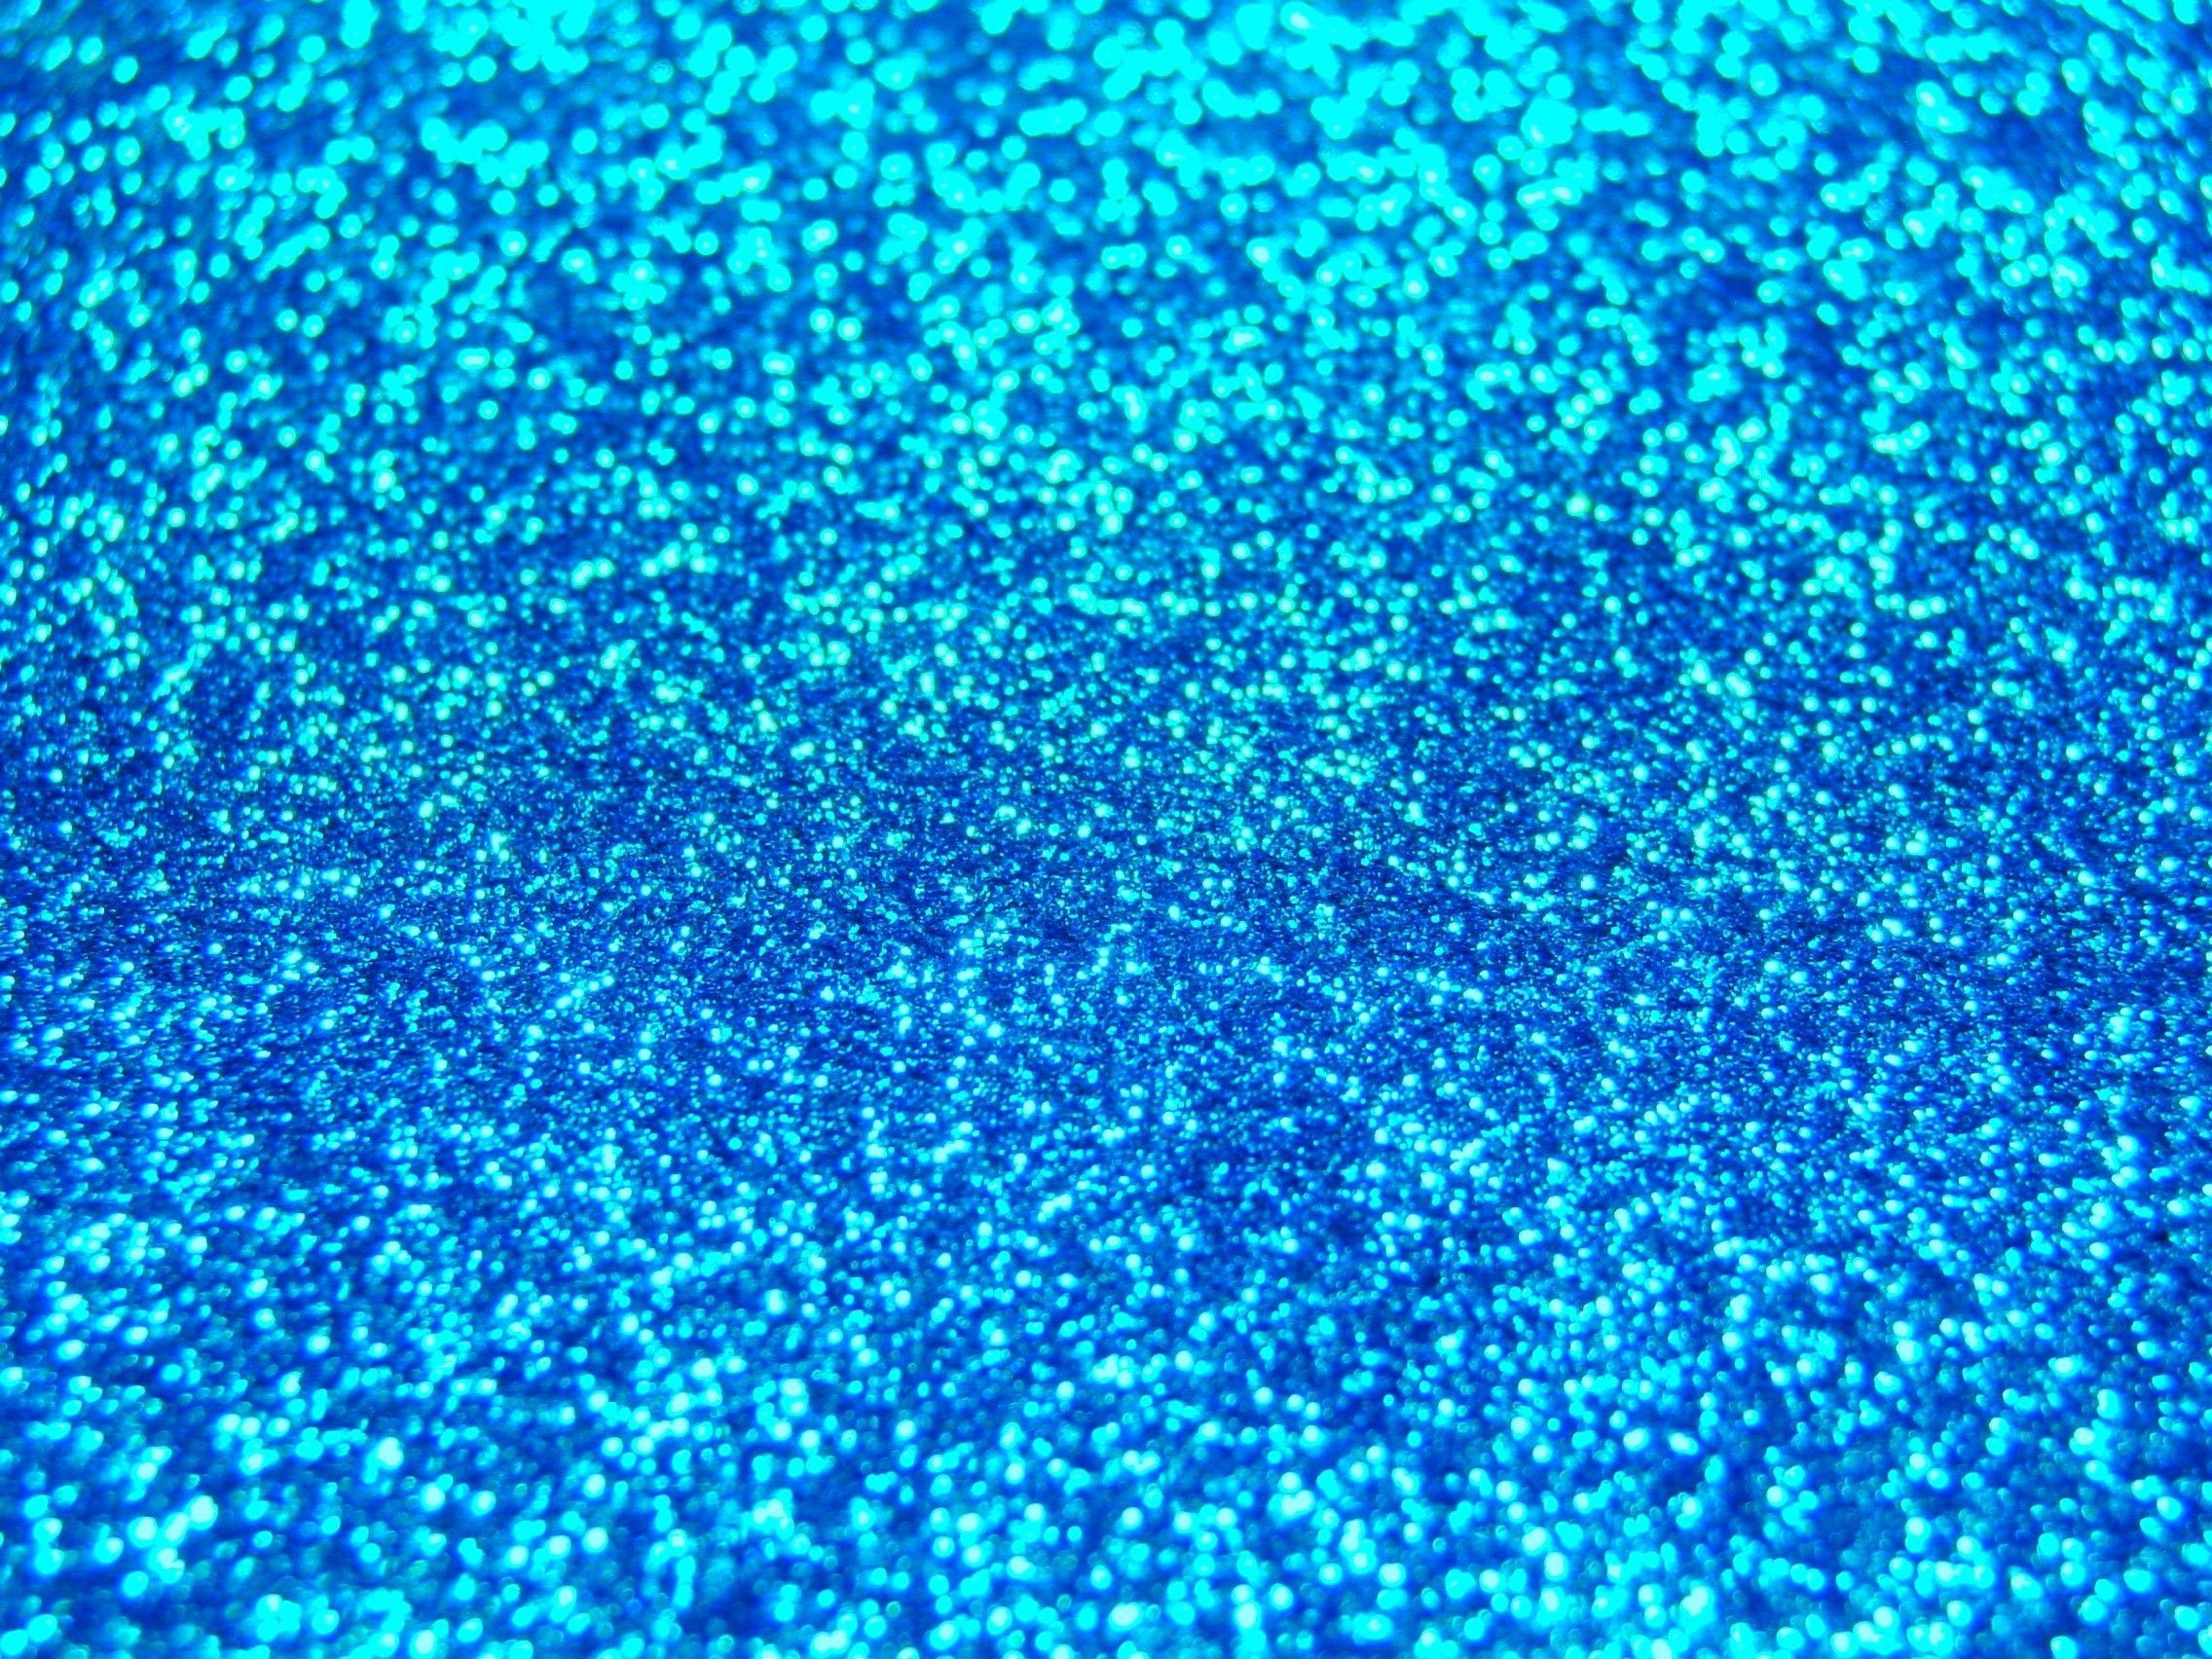 Blue Glitter Backgrounds